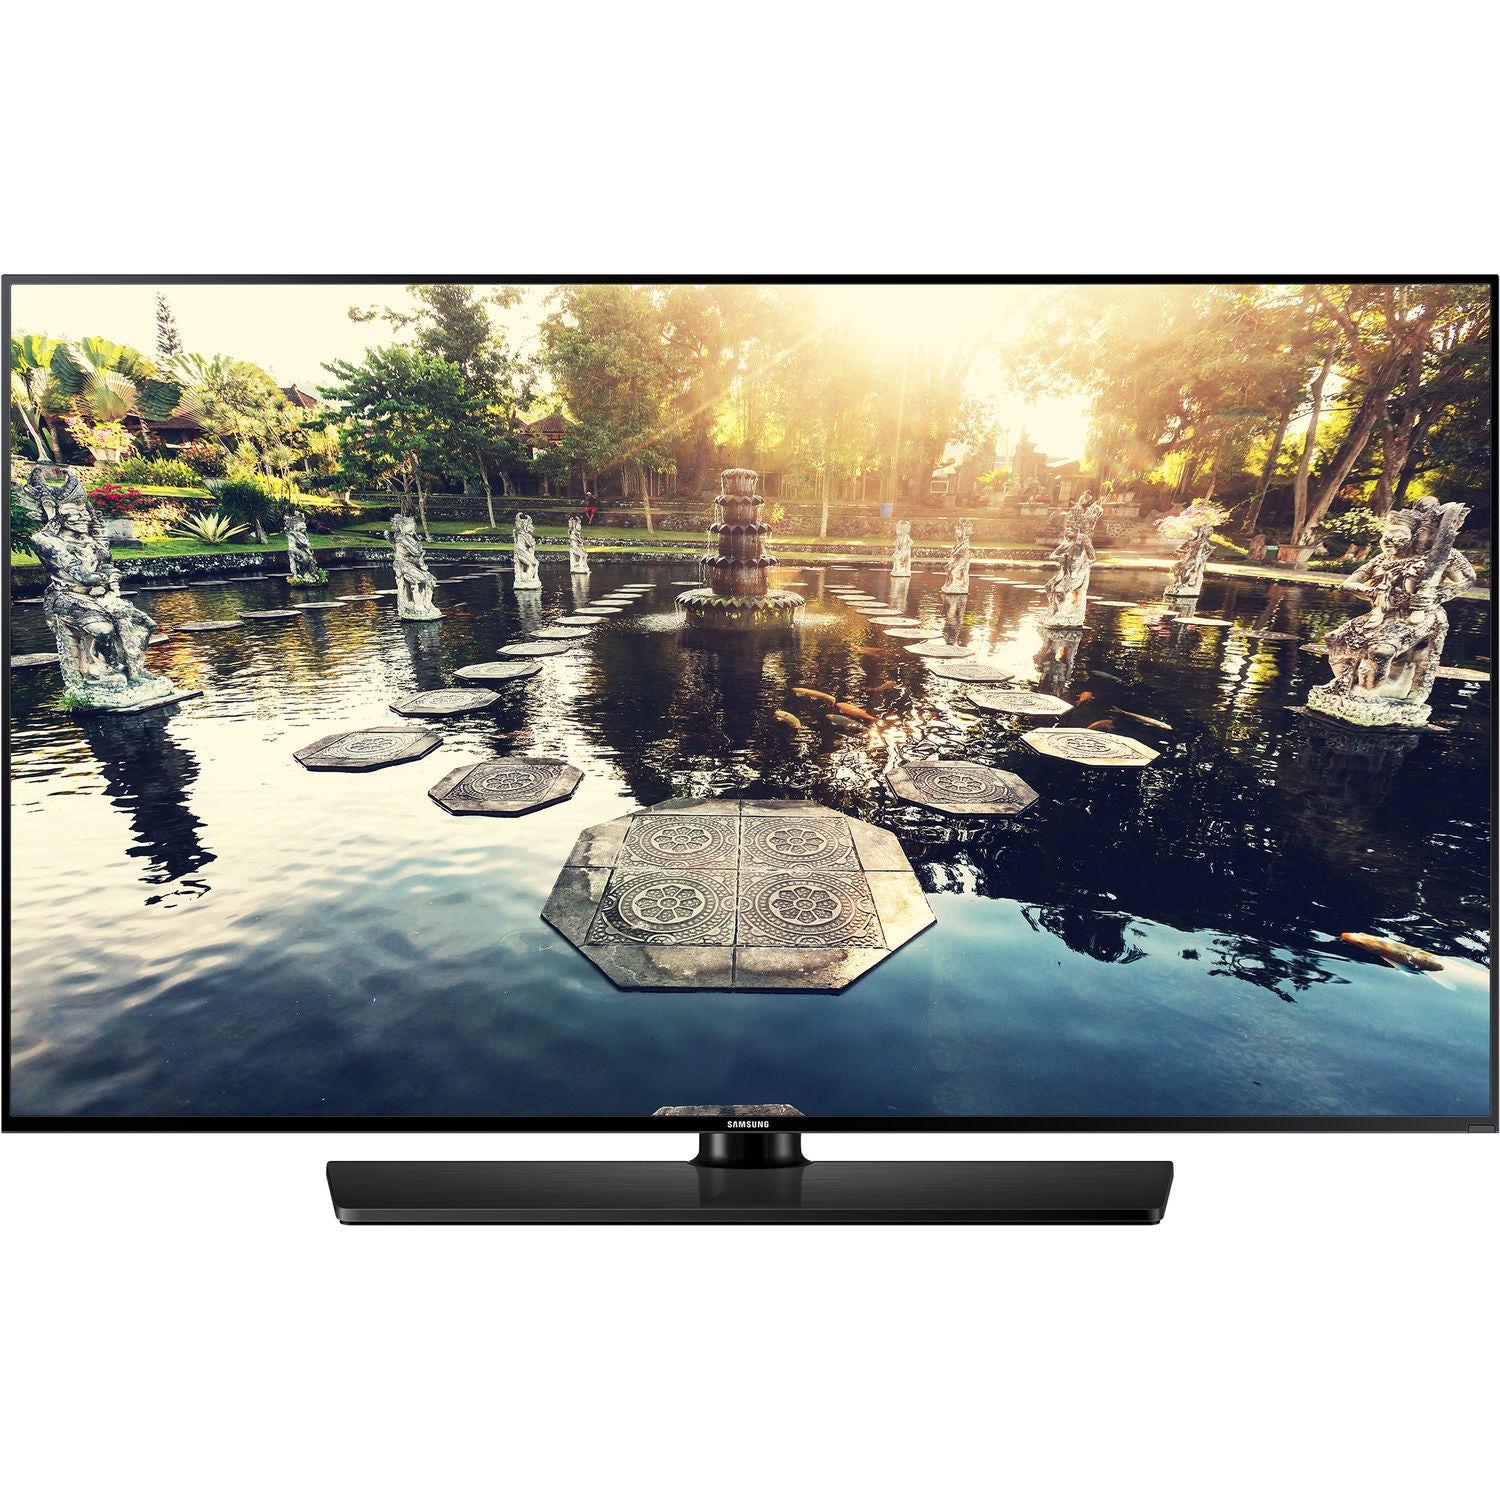 Samsung HG65NE690EFXZA 65" Full HD Slim Direct-Lit LED Hospitality Smart TV with Built-in Wi-Fi (Black) - Samsung Parts USA